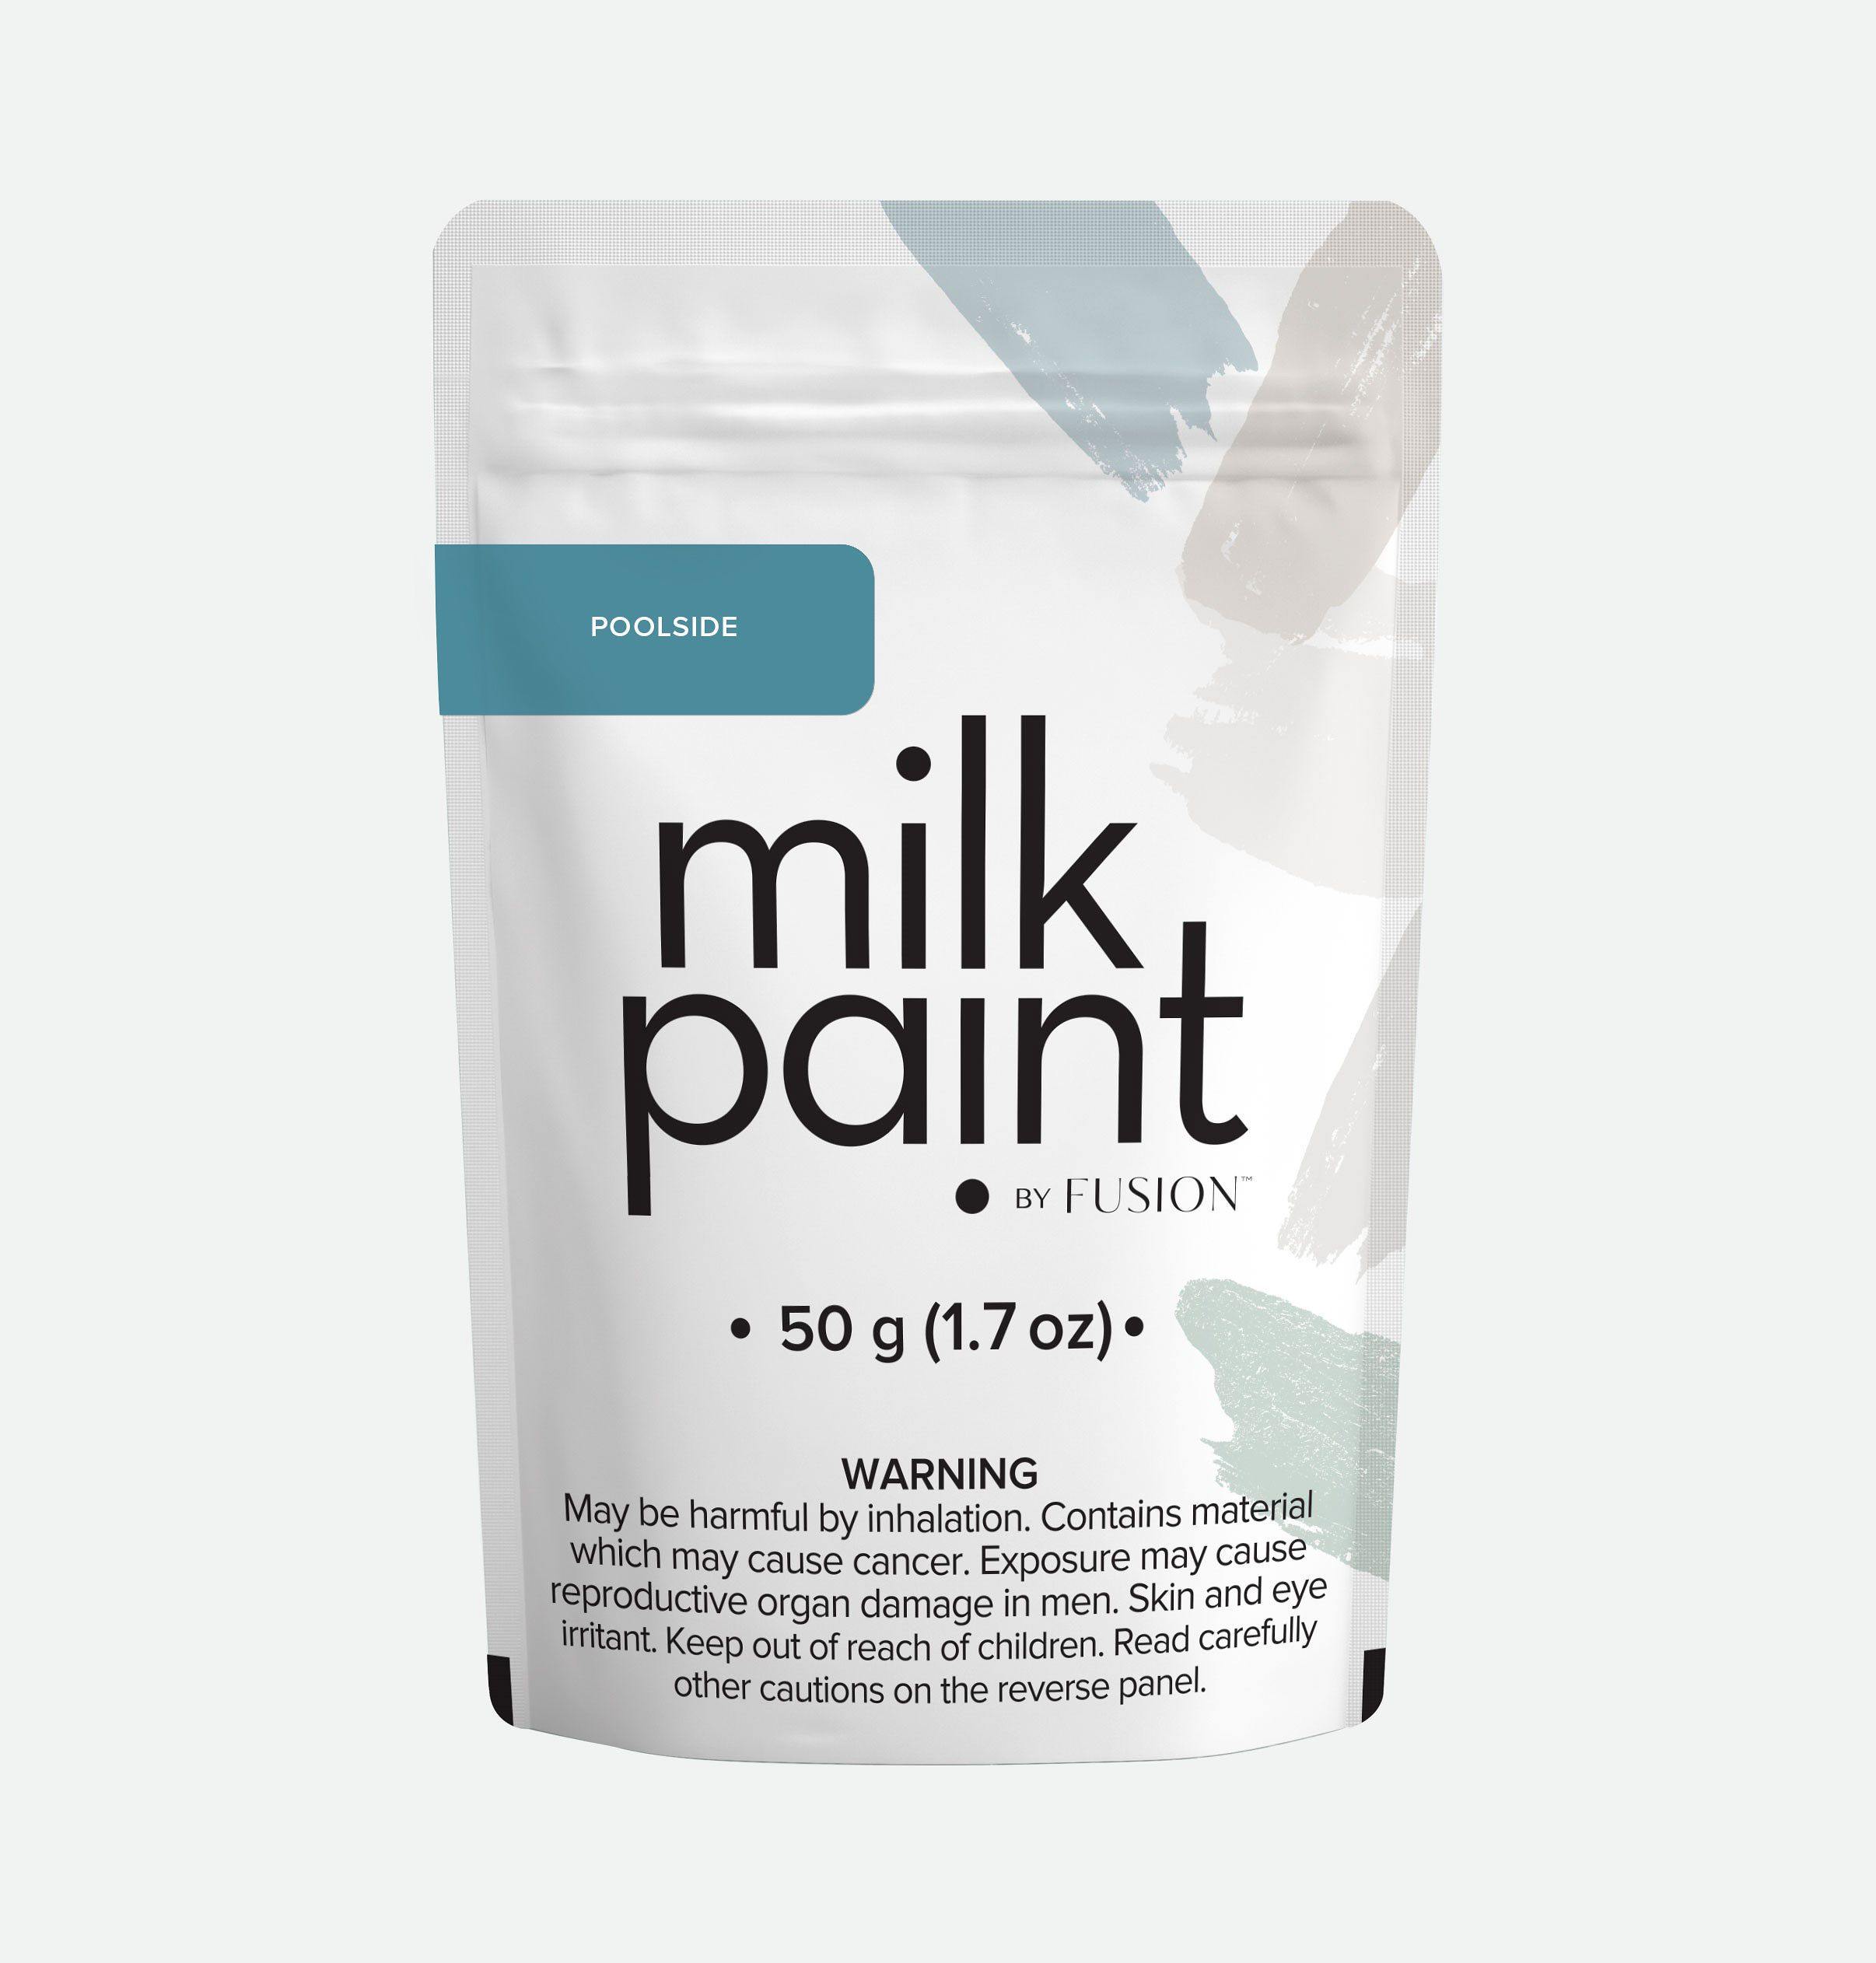 Fusion Milk Paint Poolside 50g